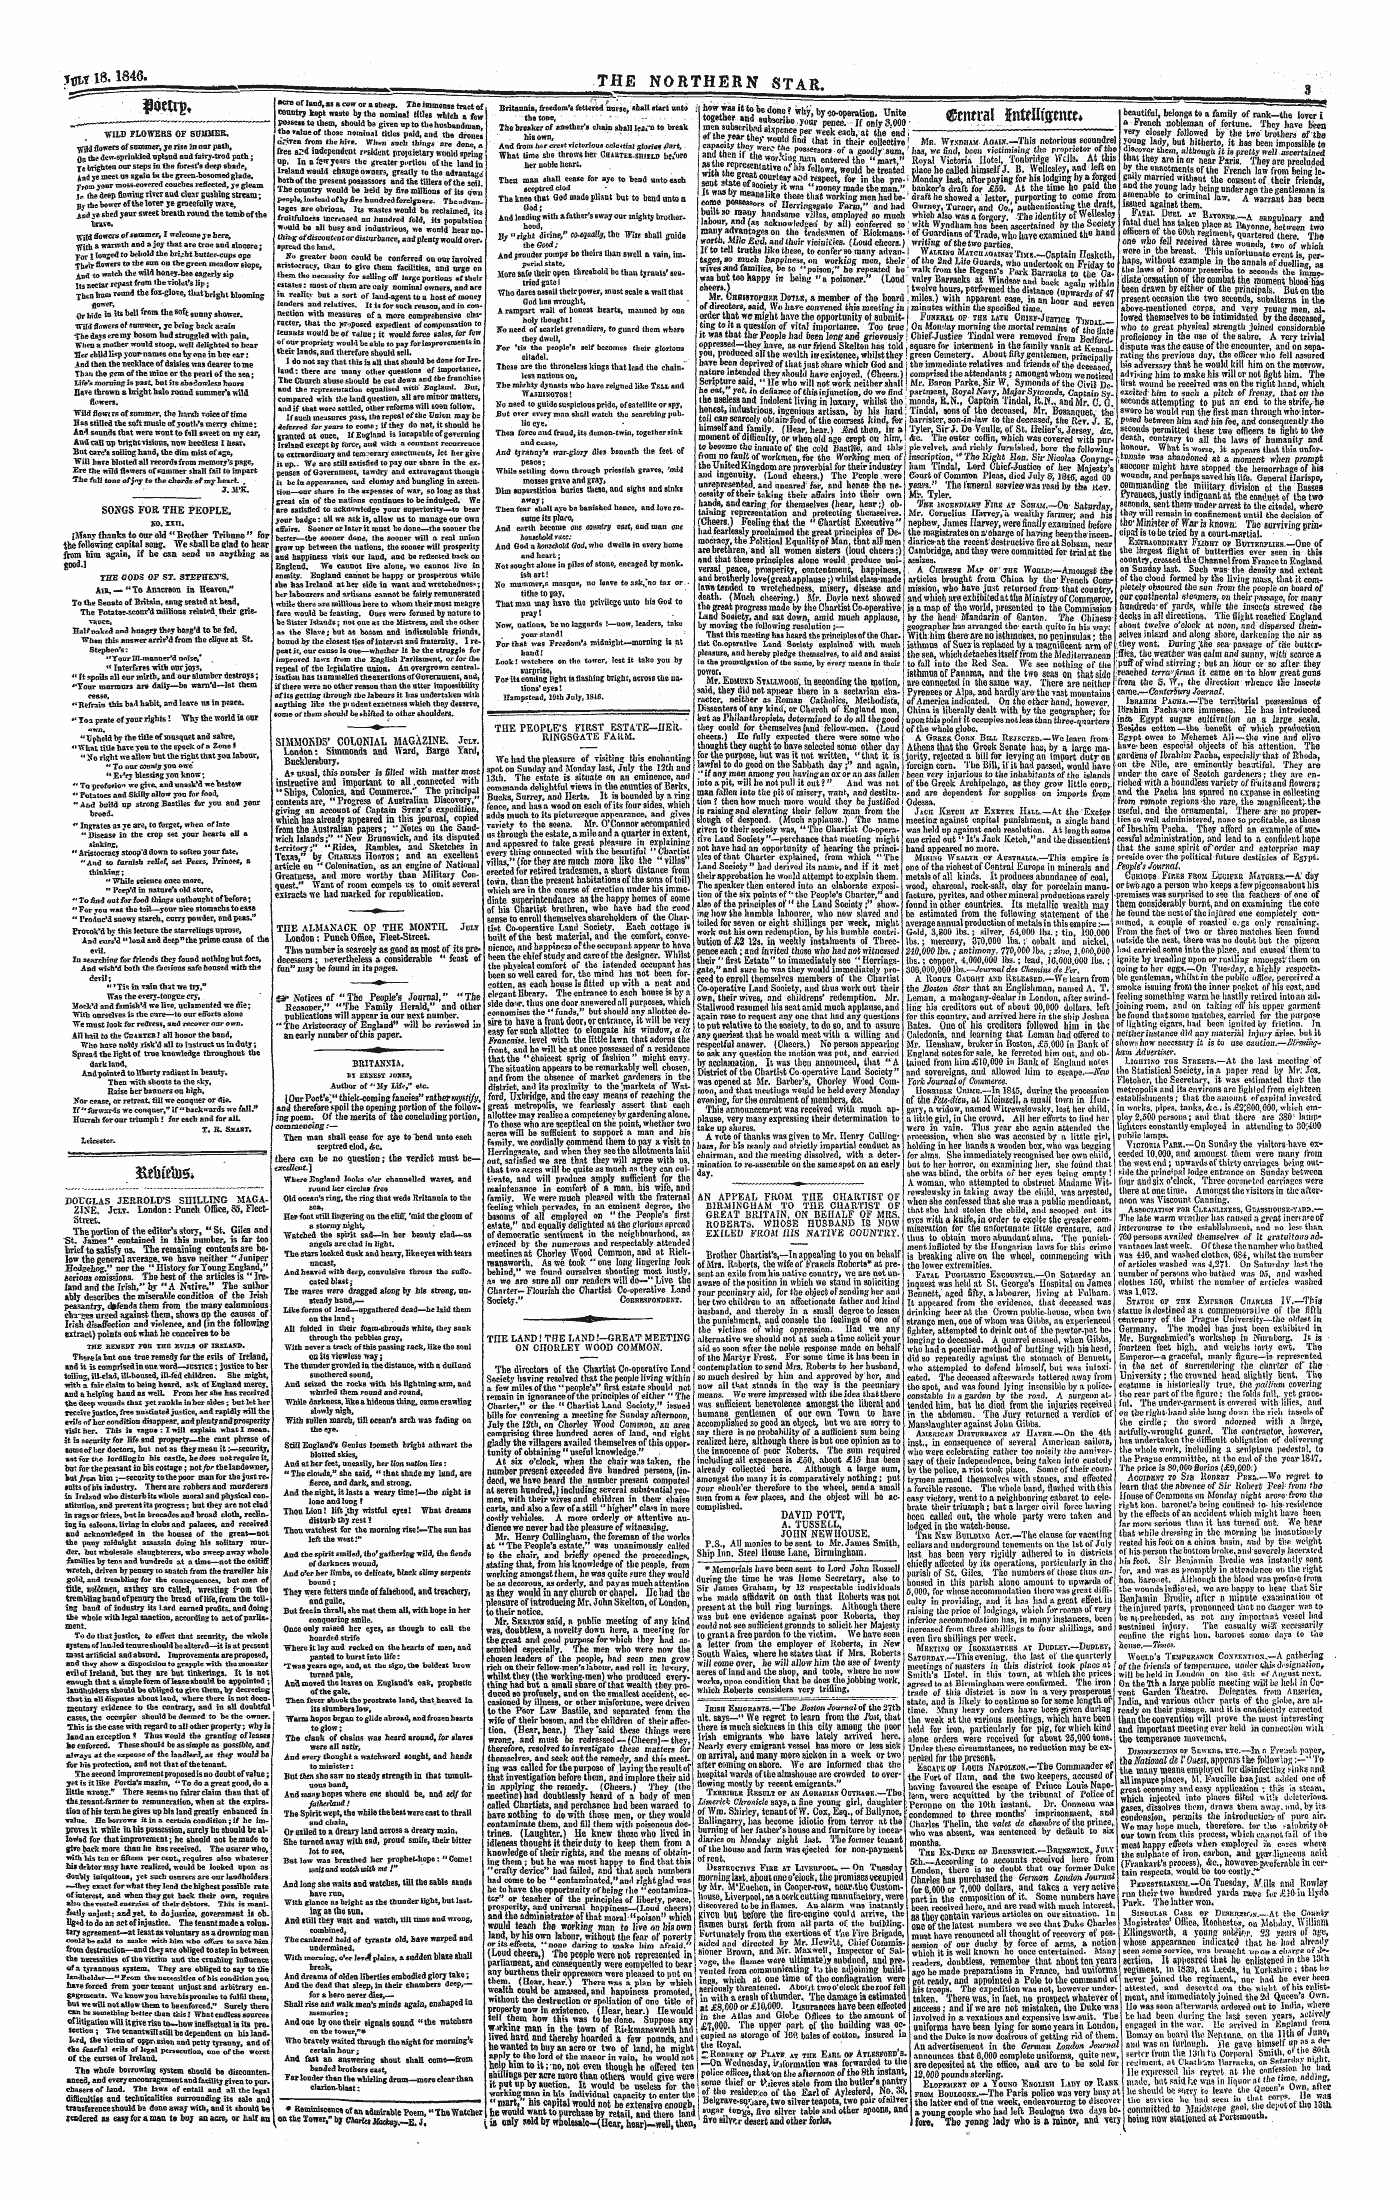 Northern Star (1837-1852): jS F Y, 1st edition - Central Entrllipme*